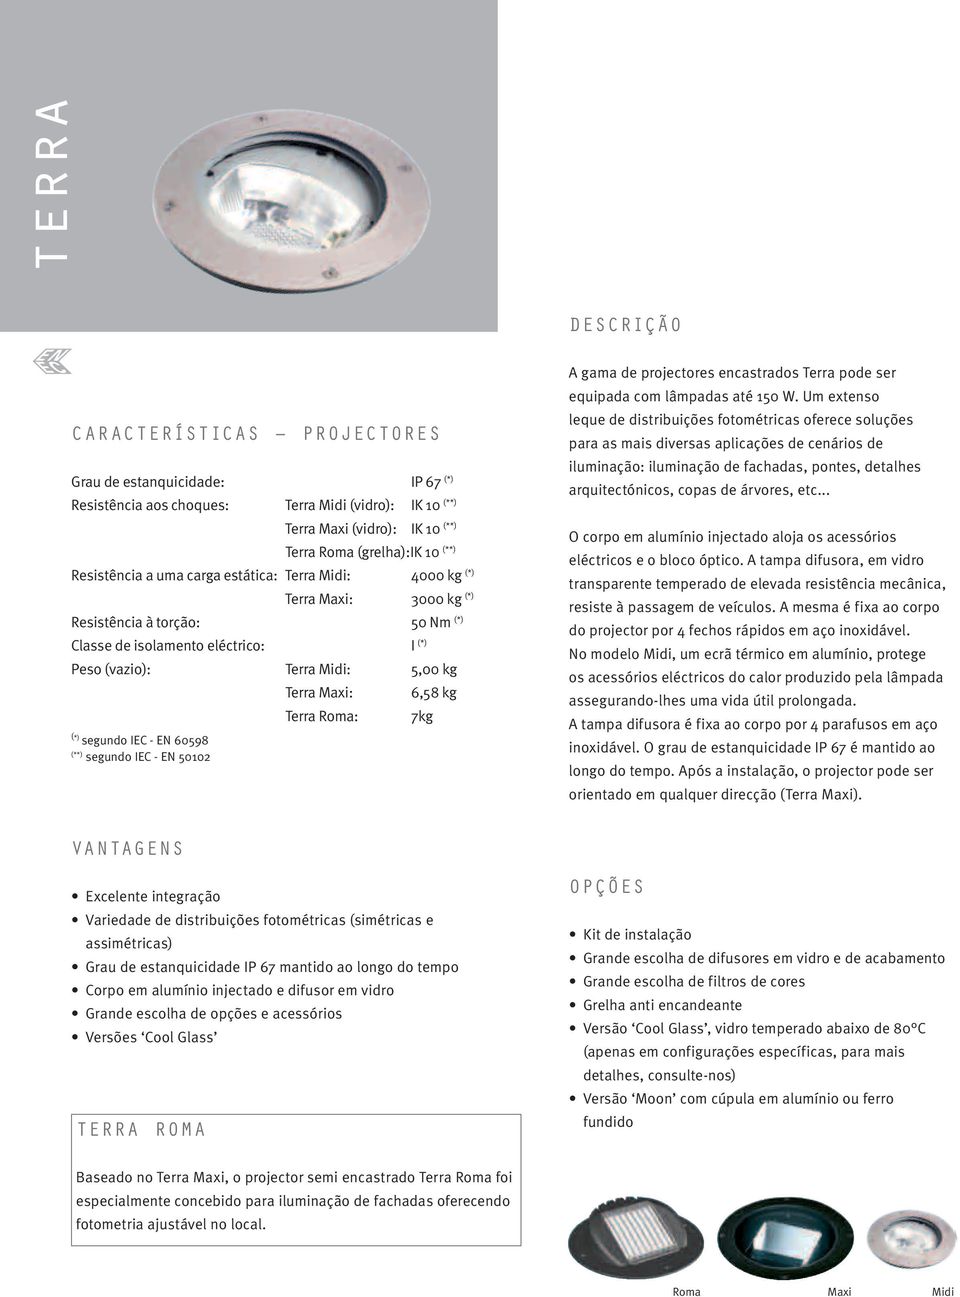 (**) segundo IEC - EN 50102 Terra Maxi: Terra Roma: 6,58 kg 7kg A gama de projectores encastrados Terra pode ser equipada com lâmpadas até 150 W.